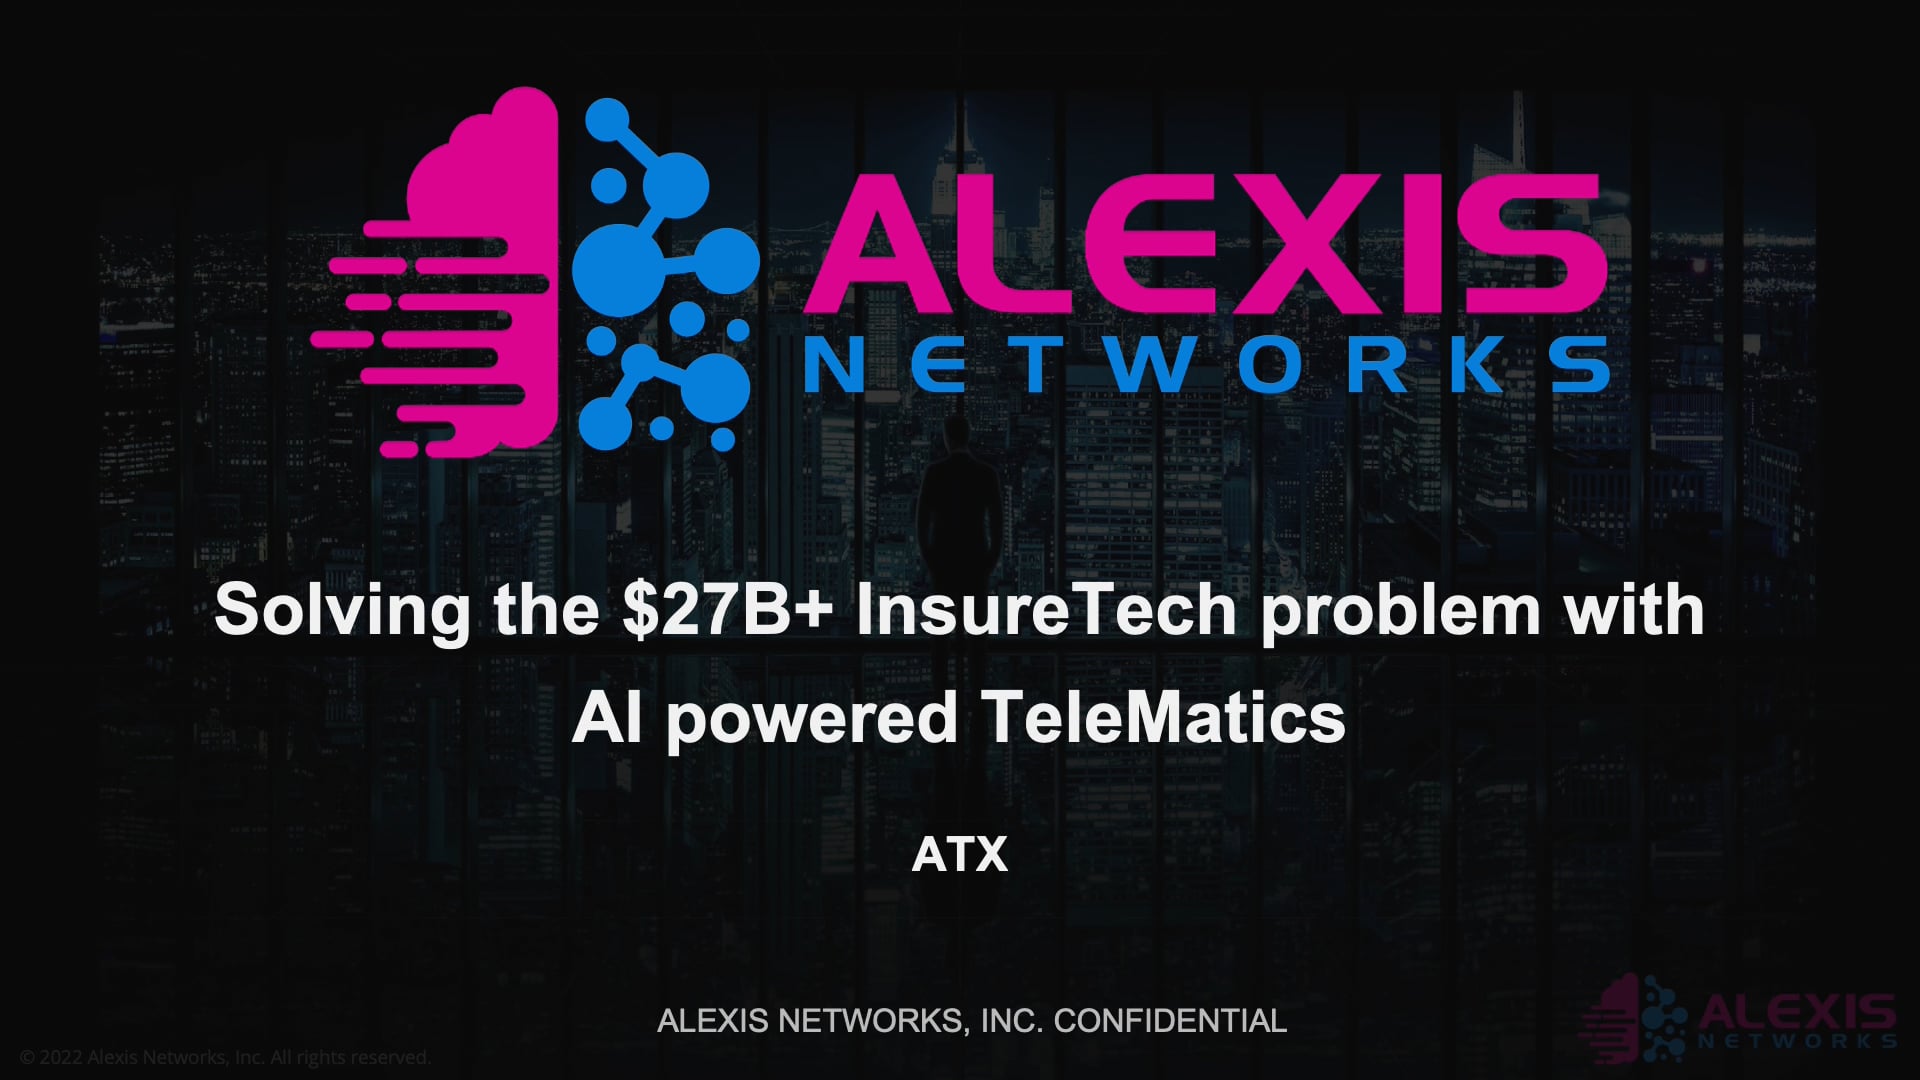 ALEXIS ATX - Solving the $27B+ InsureTech problem with AI powered TeleMatics